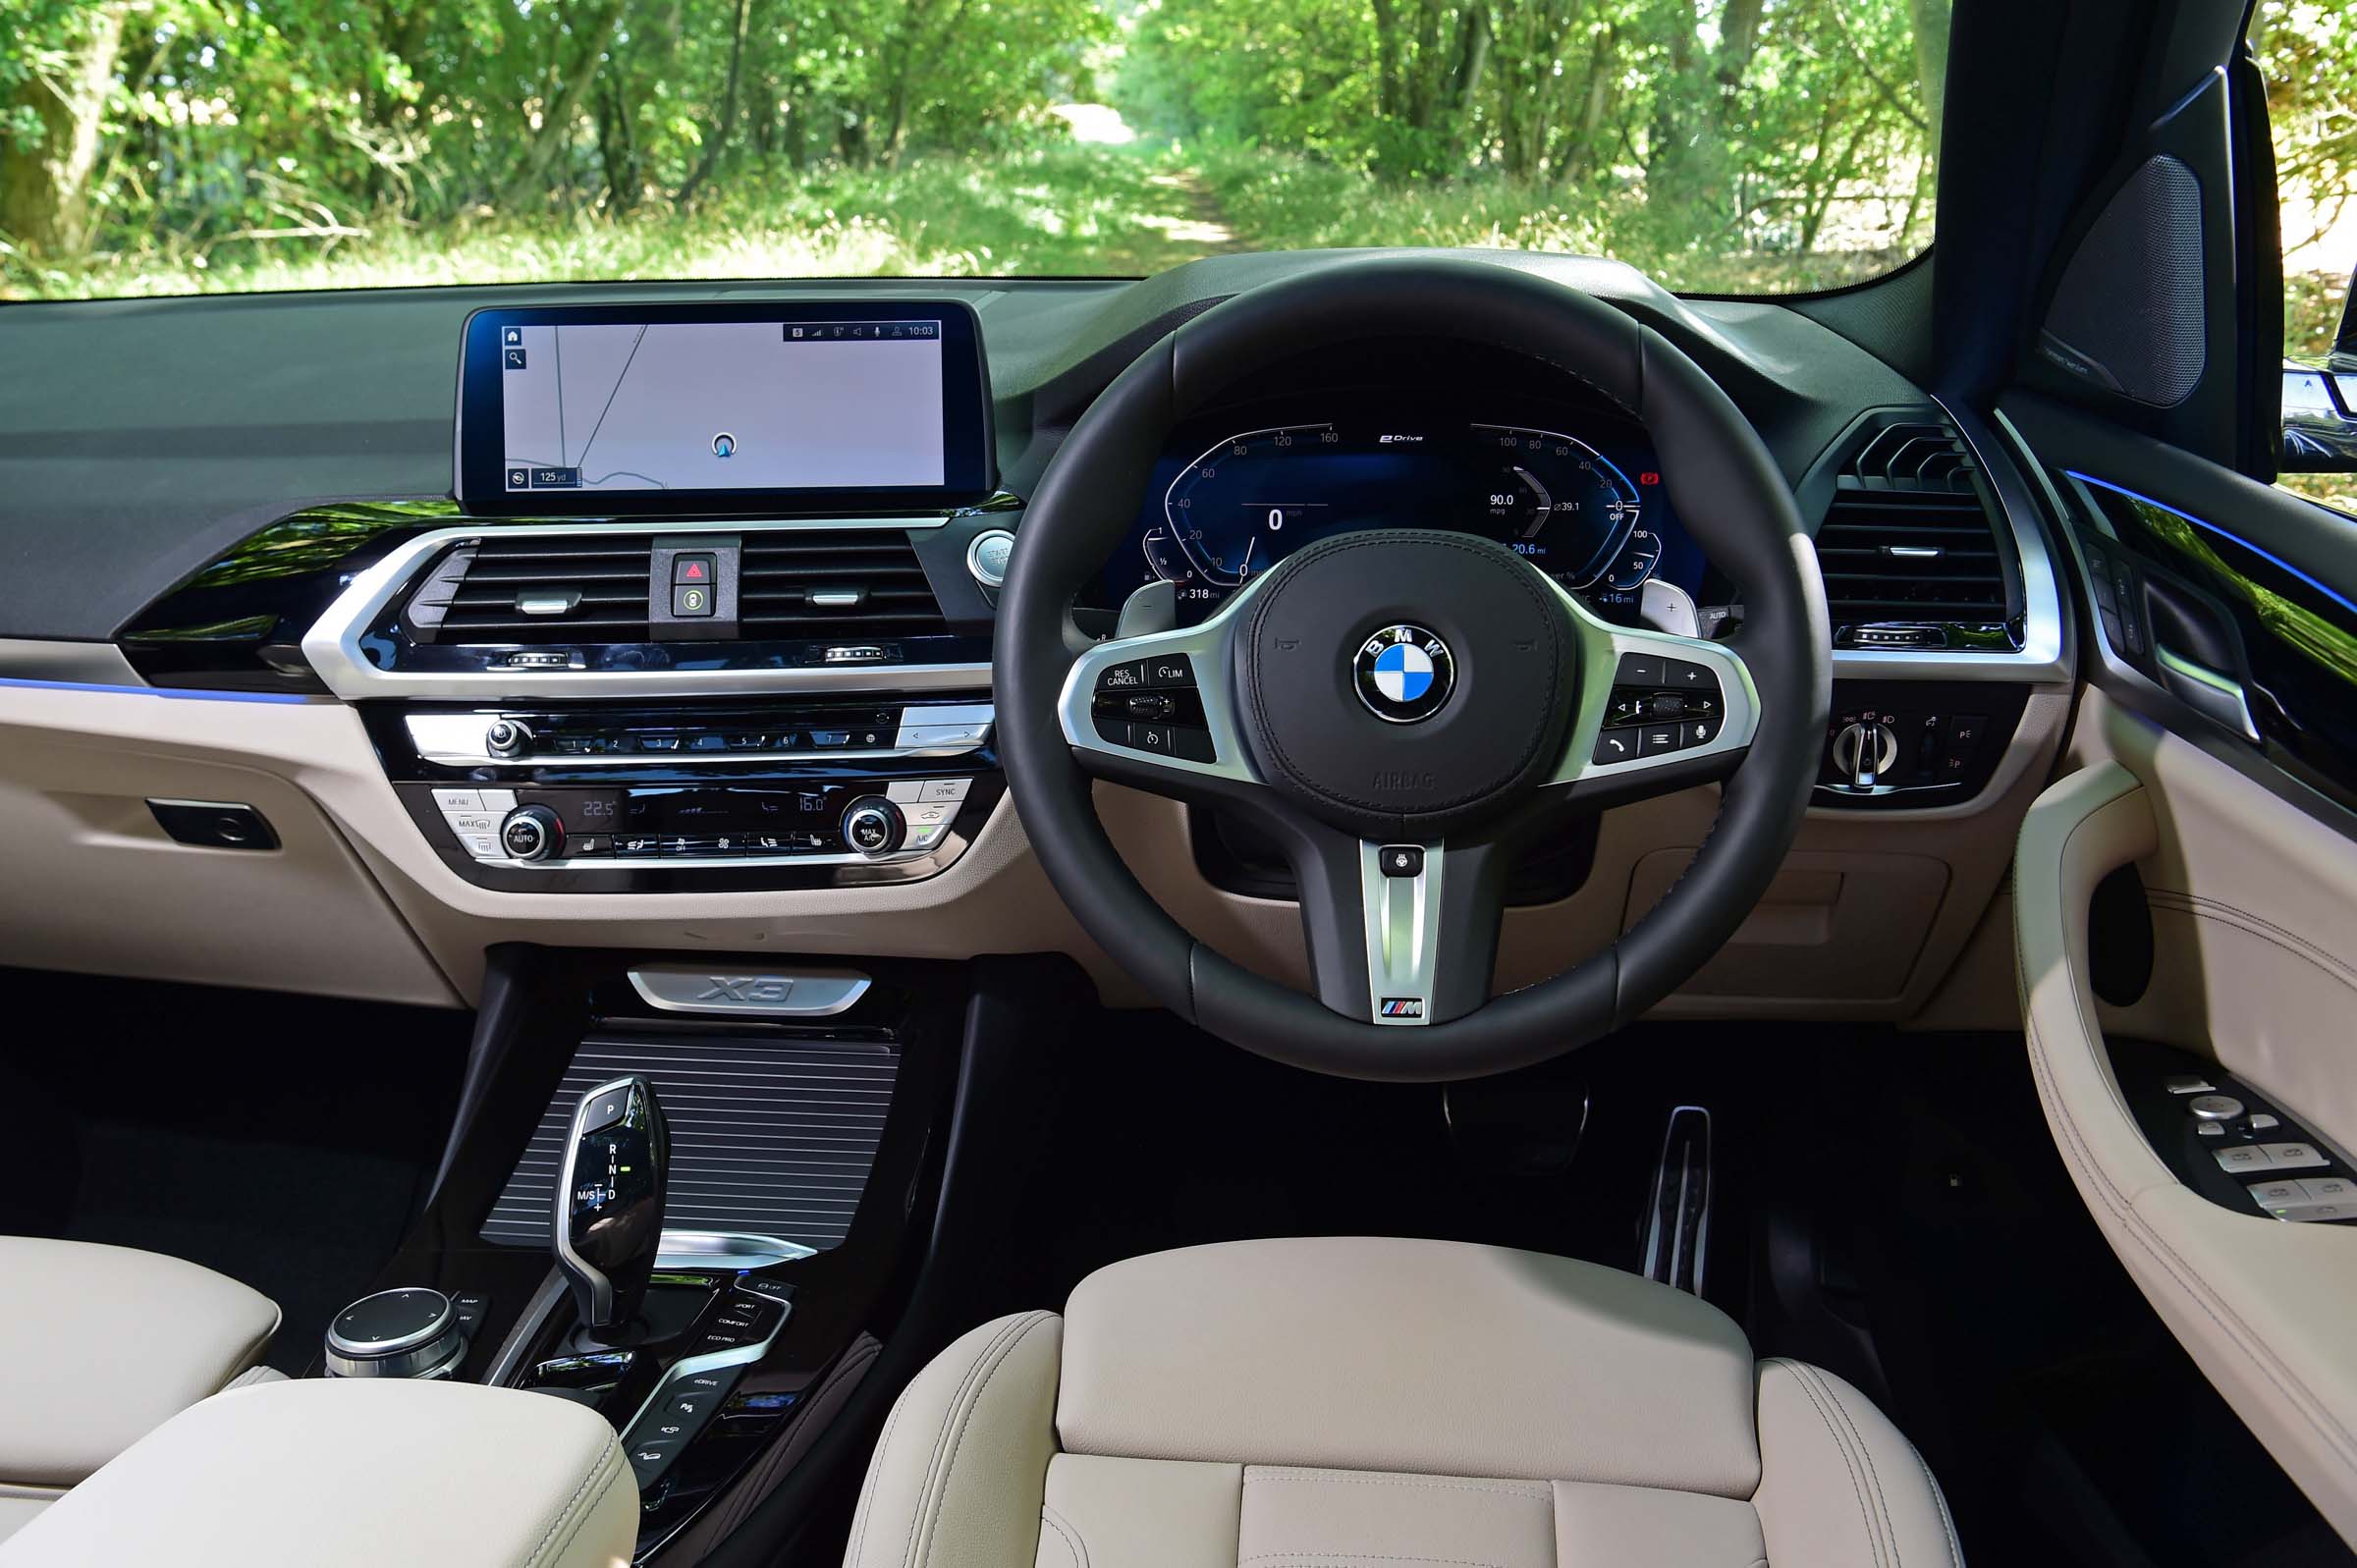 BMW X3 hybrid interior & comfort | DrivingElectric